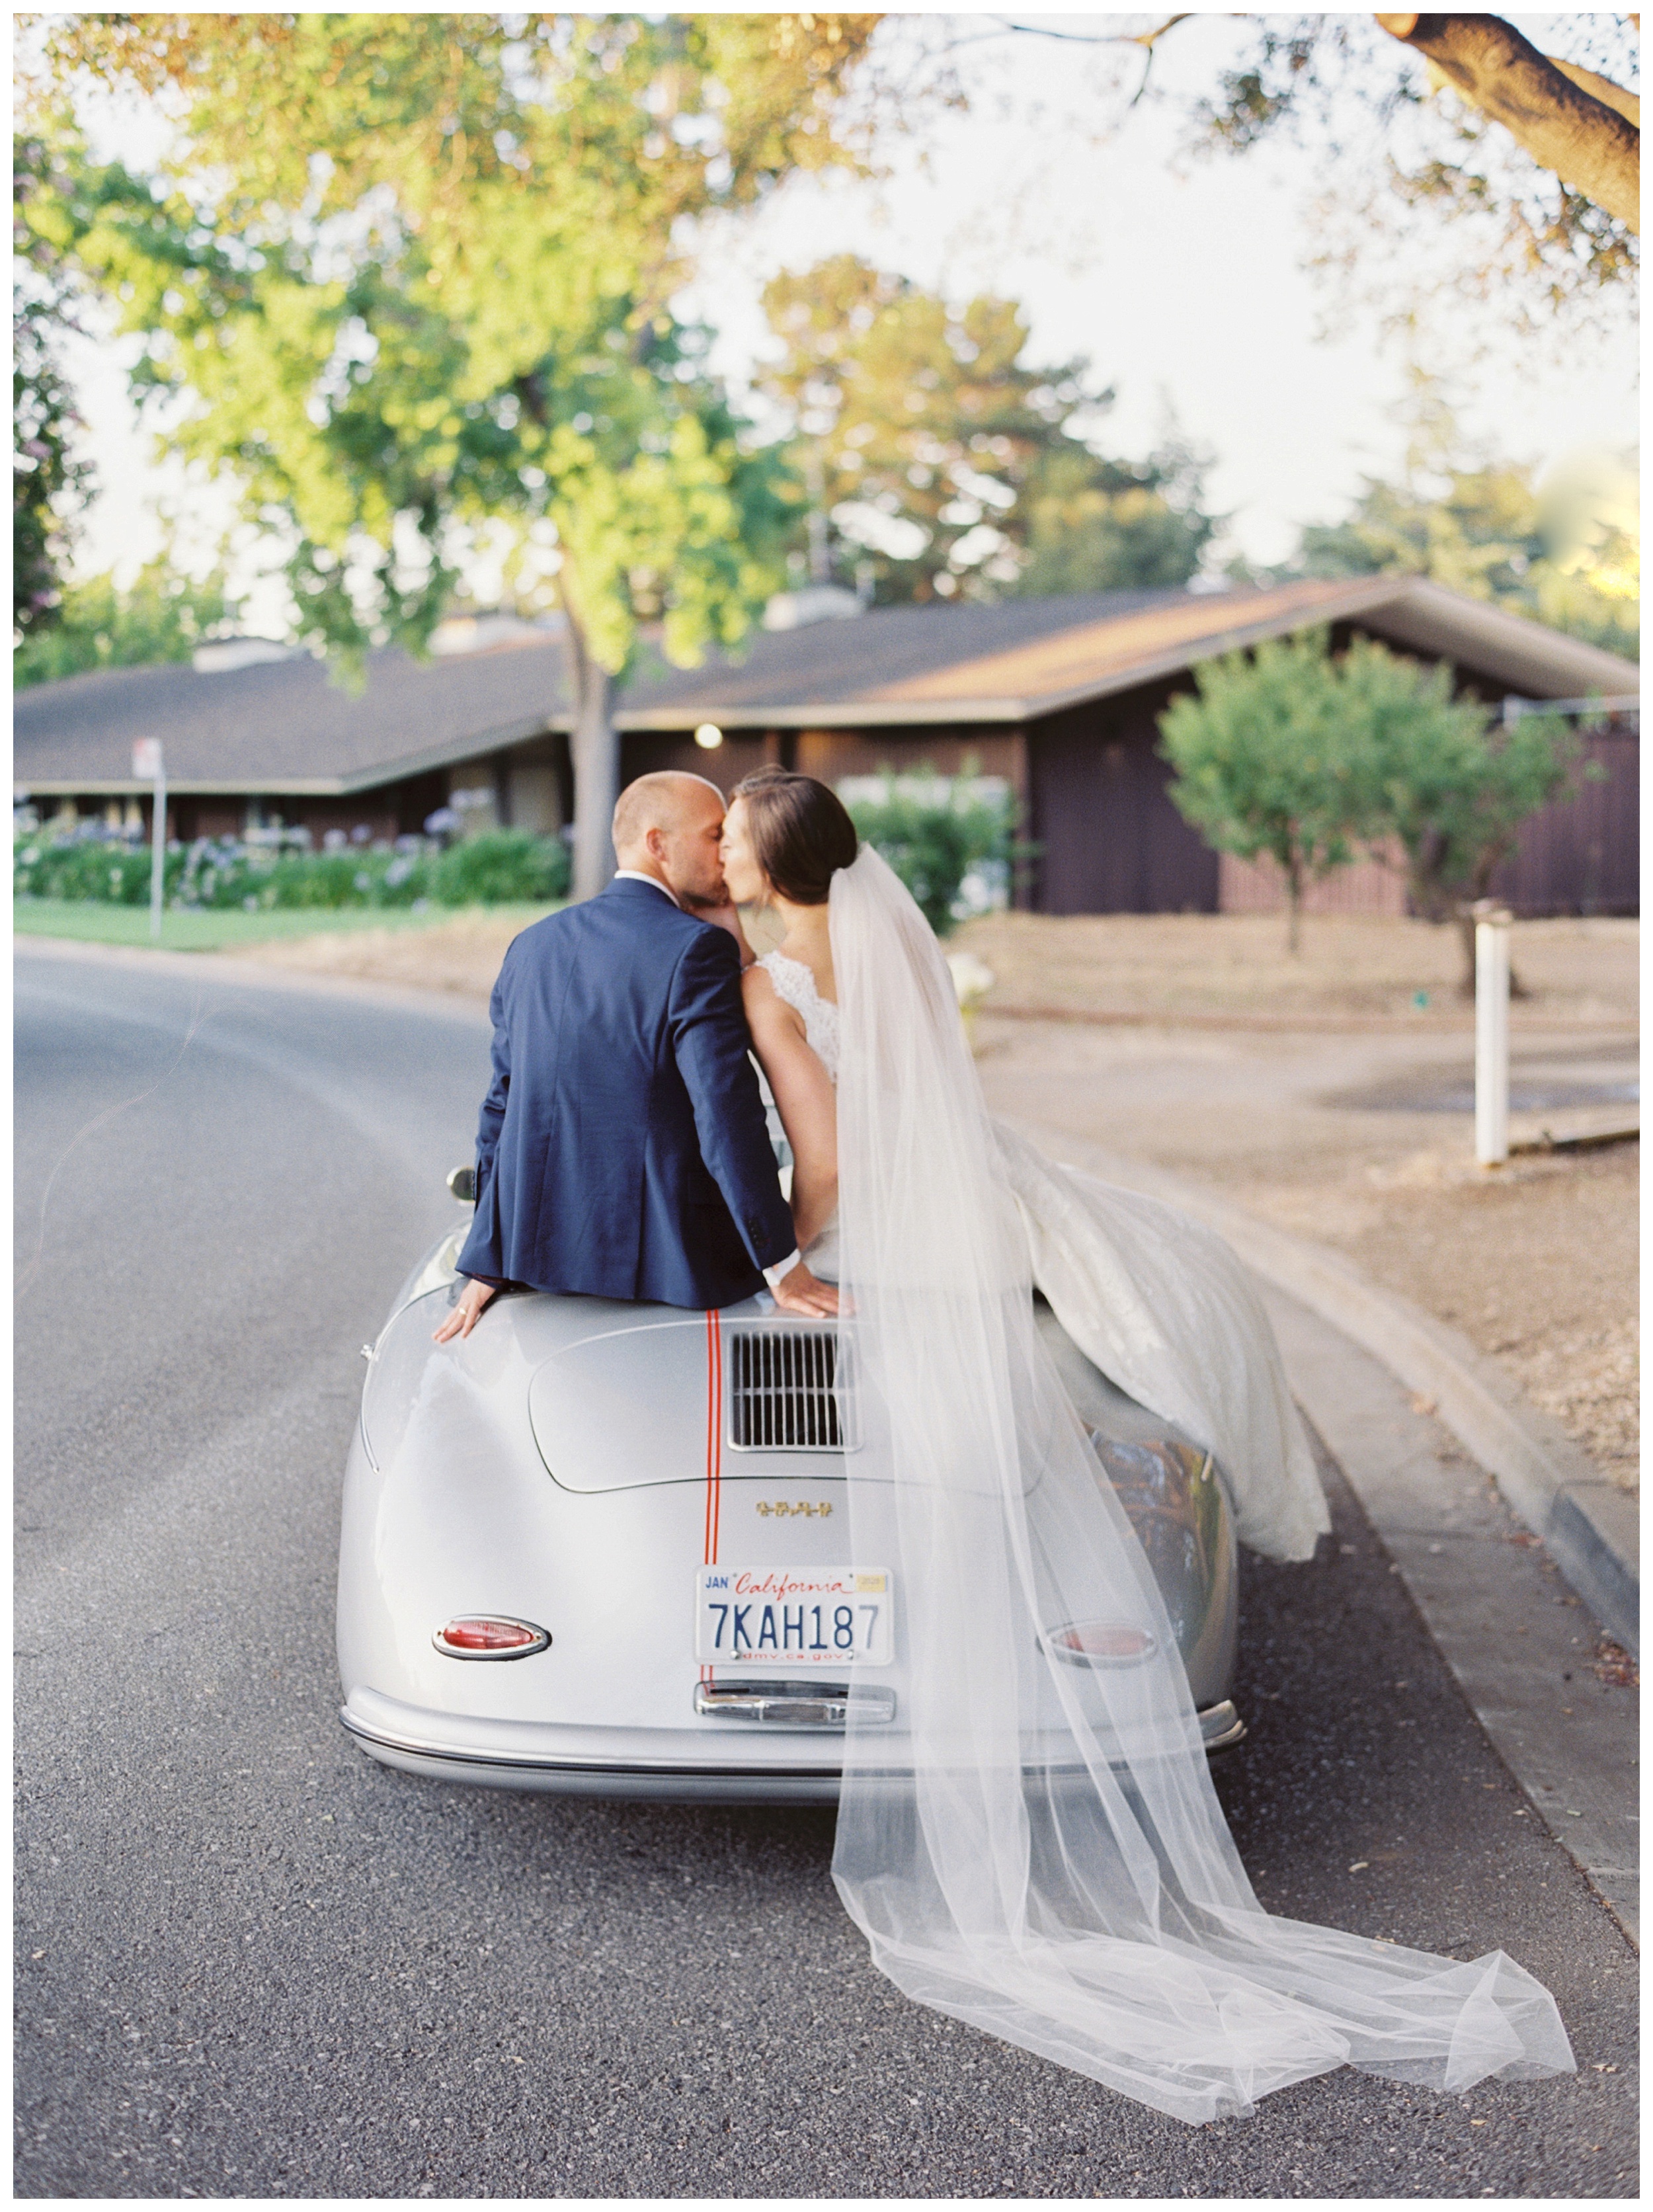 Best California Wedding Photographer Kir Tuben